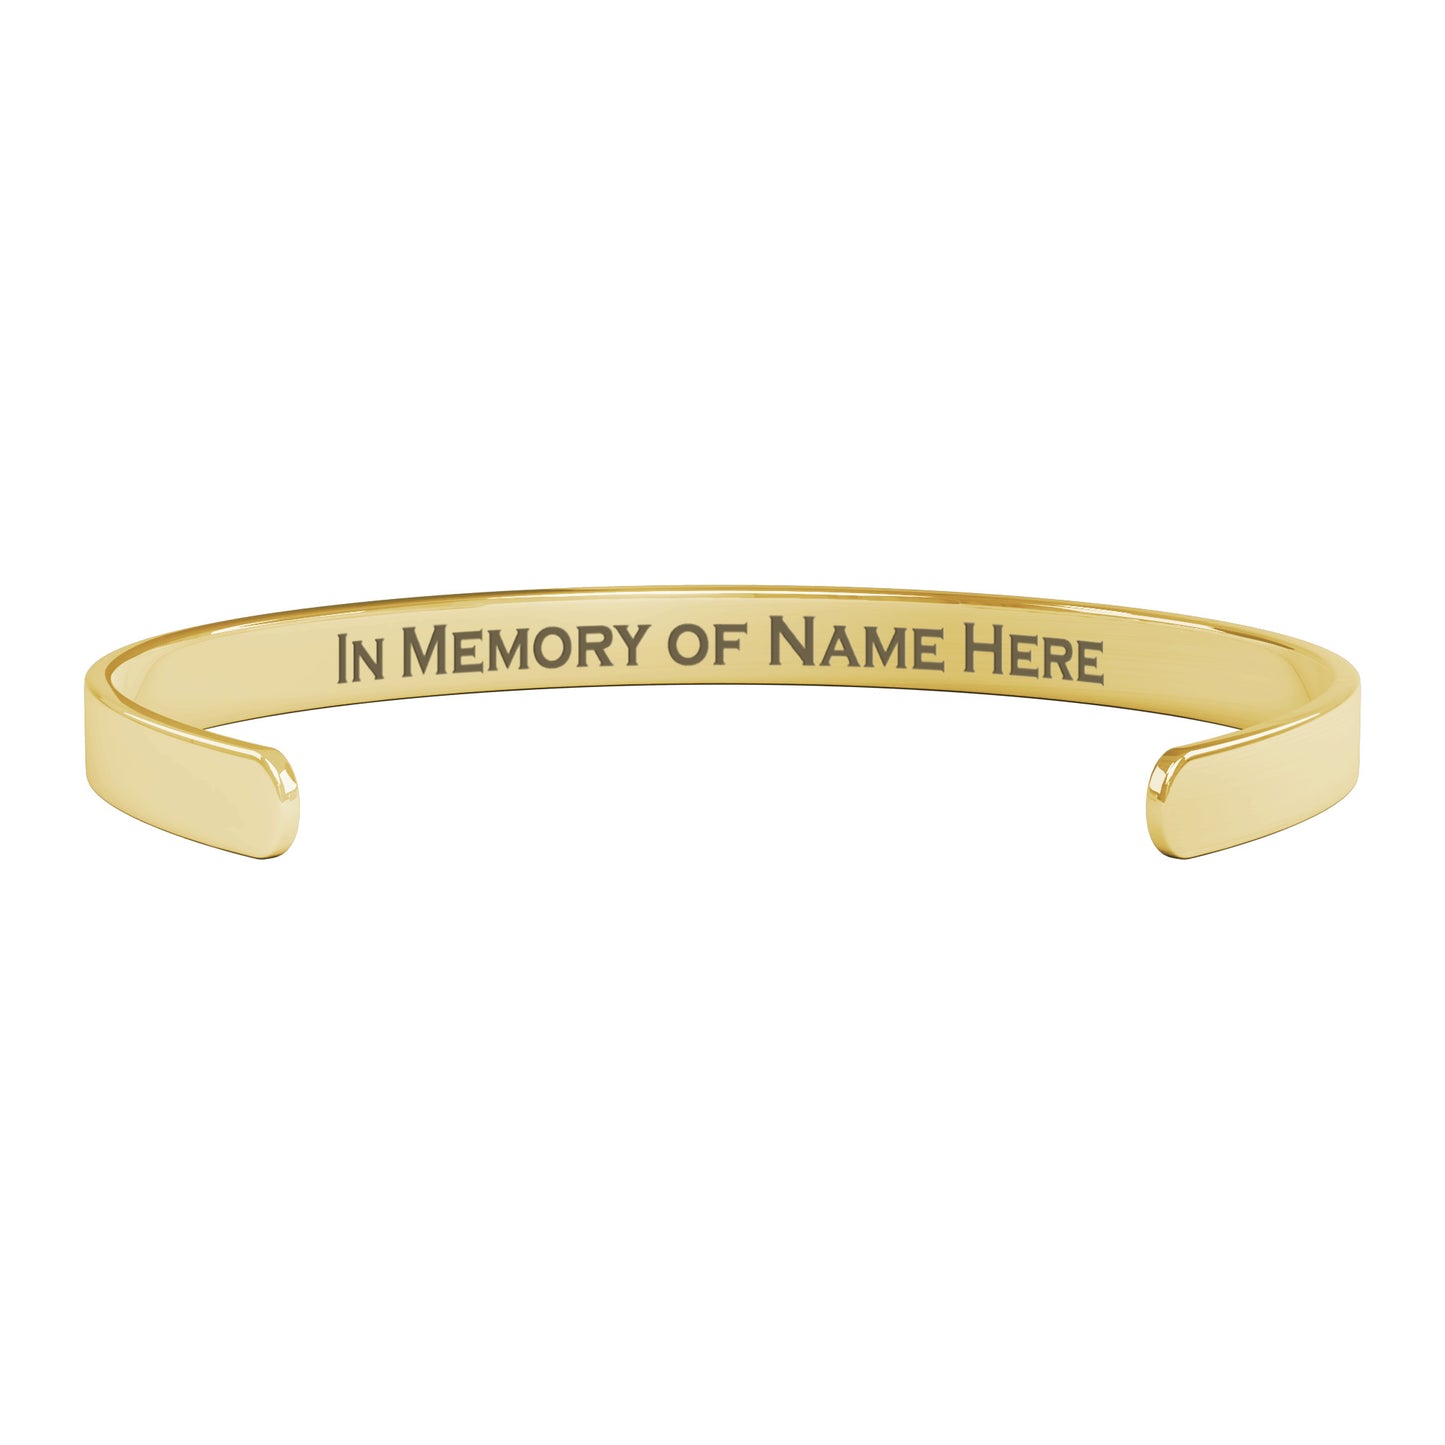 Personalized Mesothelioma Awareness Cuff Bracelet